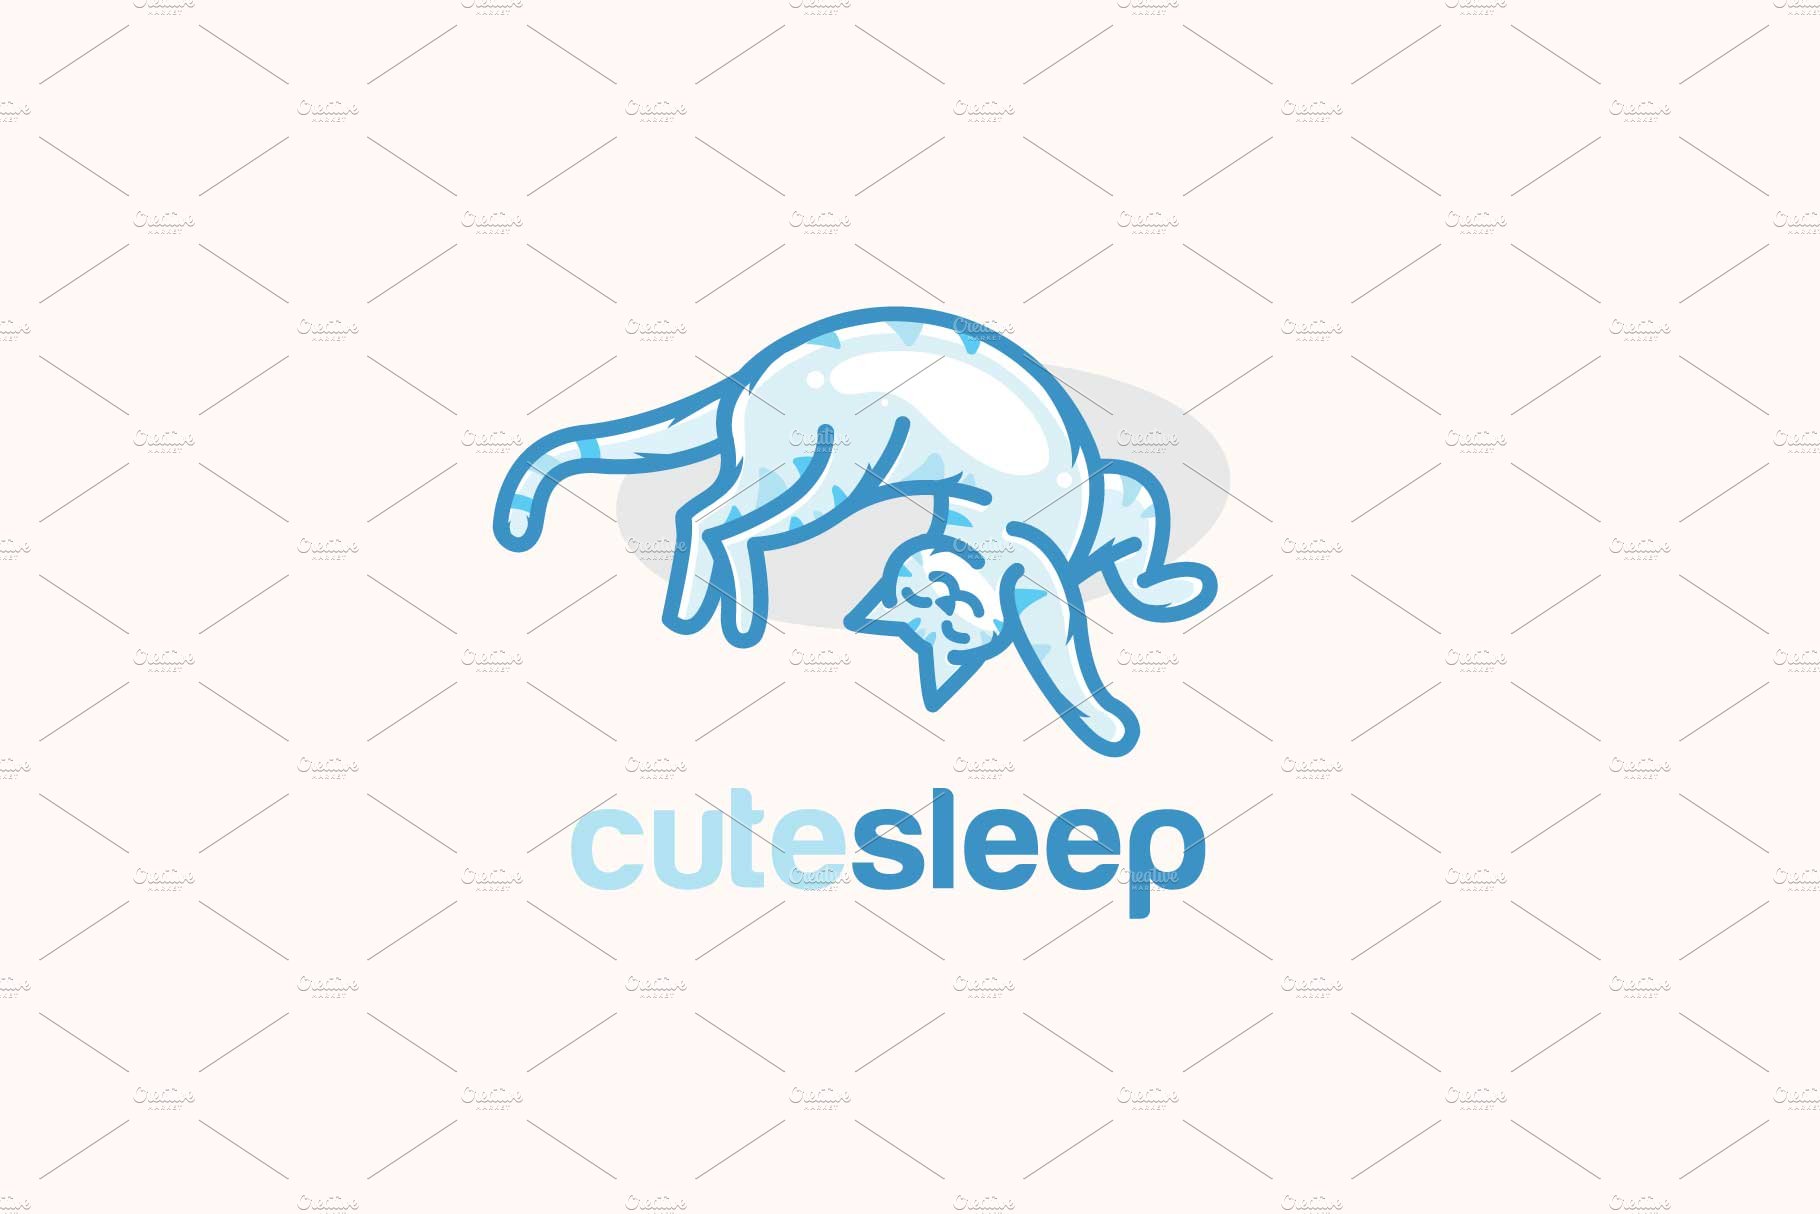 sleeping cat logo cover image.